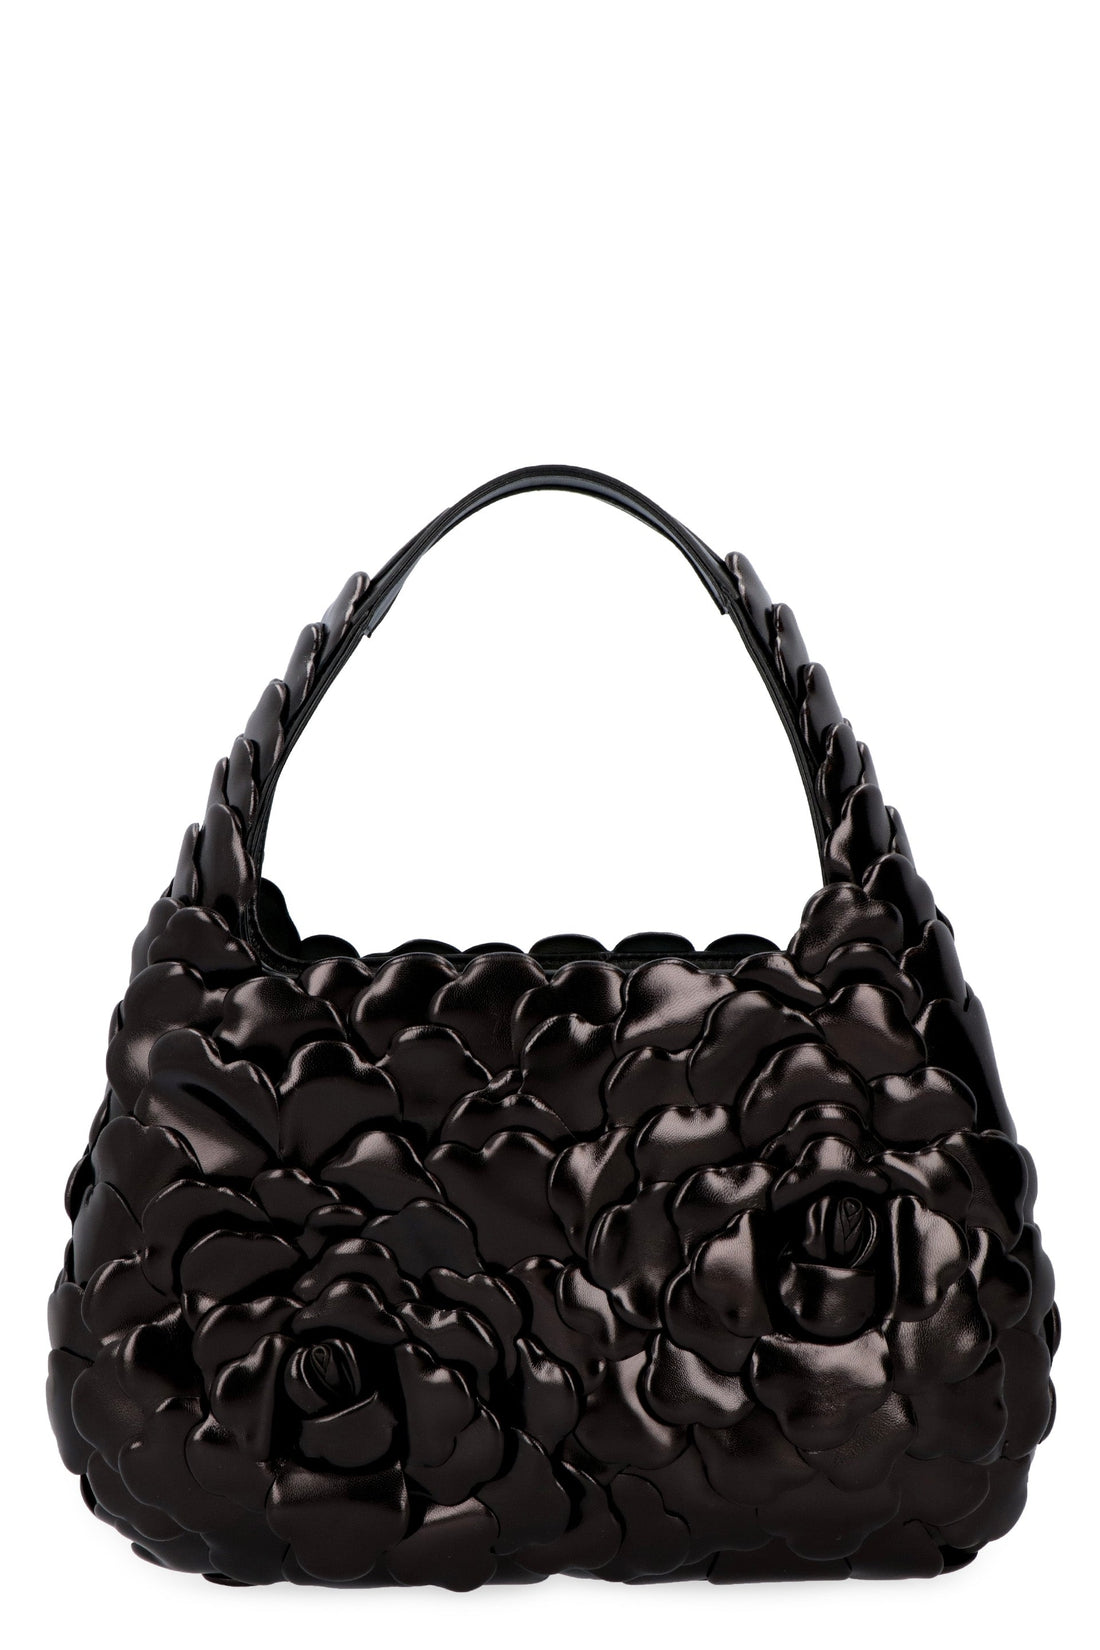 Valentino-OUTLET-SALE-Hobo leather small bag - Atelier Bag Valentino Garavani 03 Rose Edition-ARCHIVIST